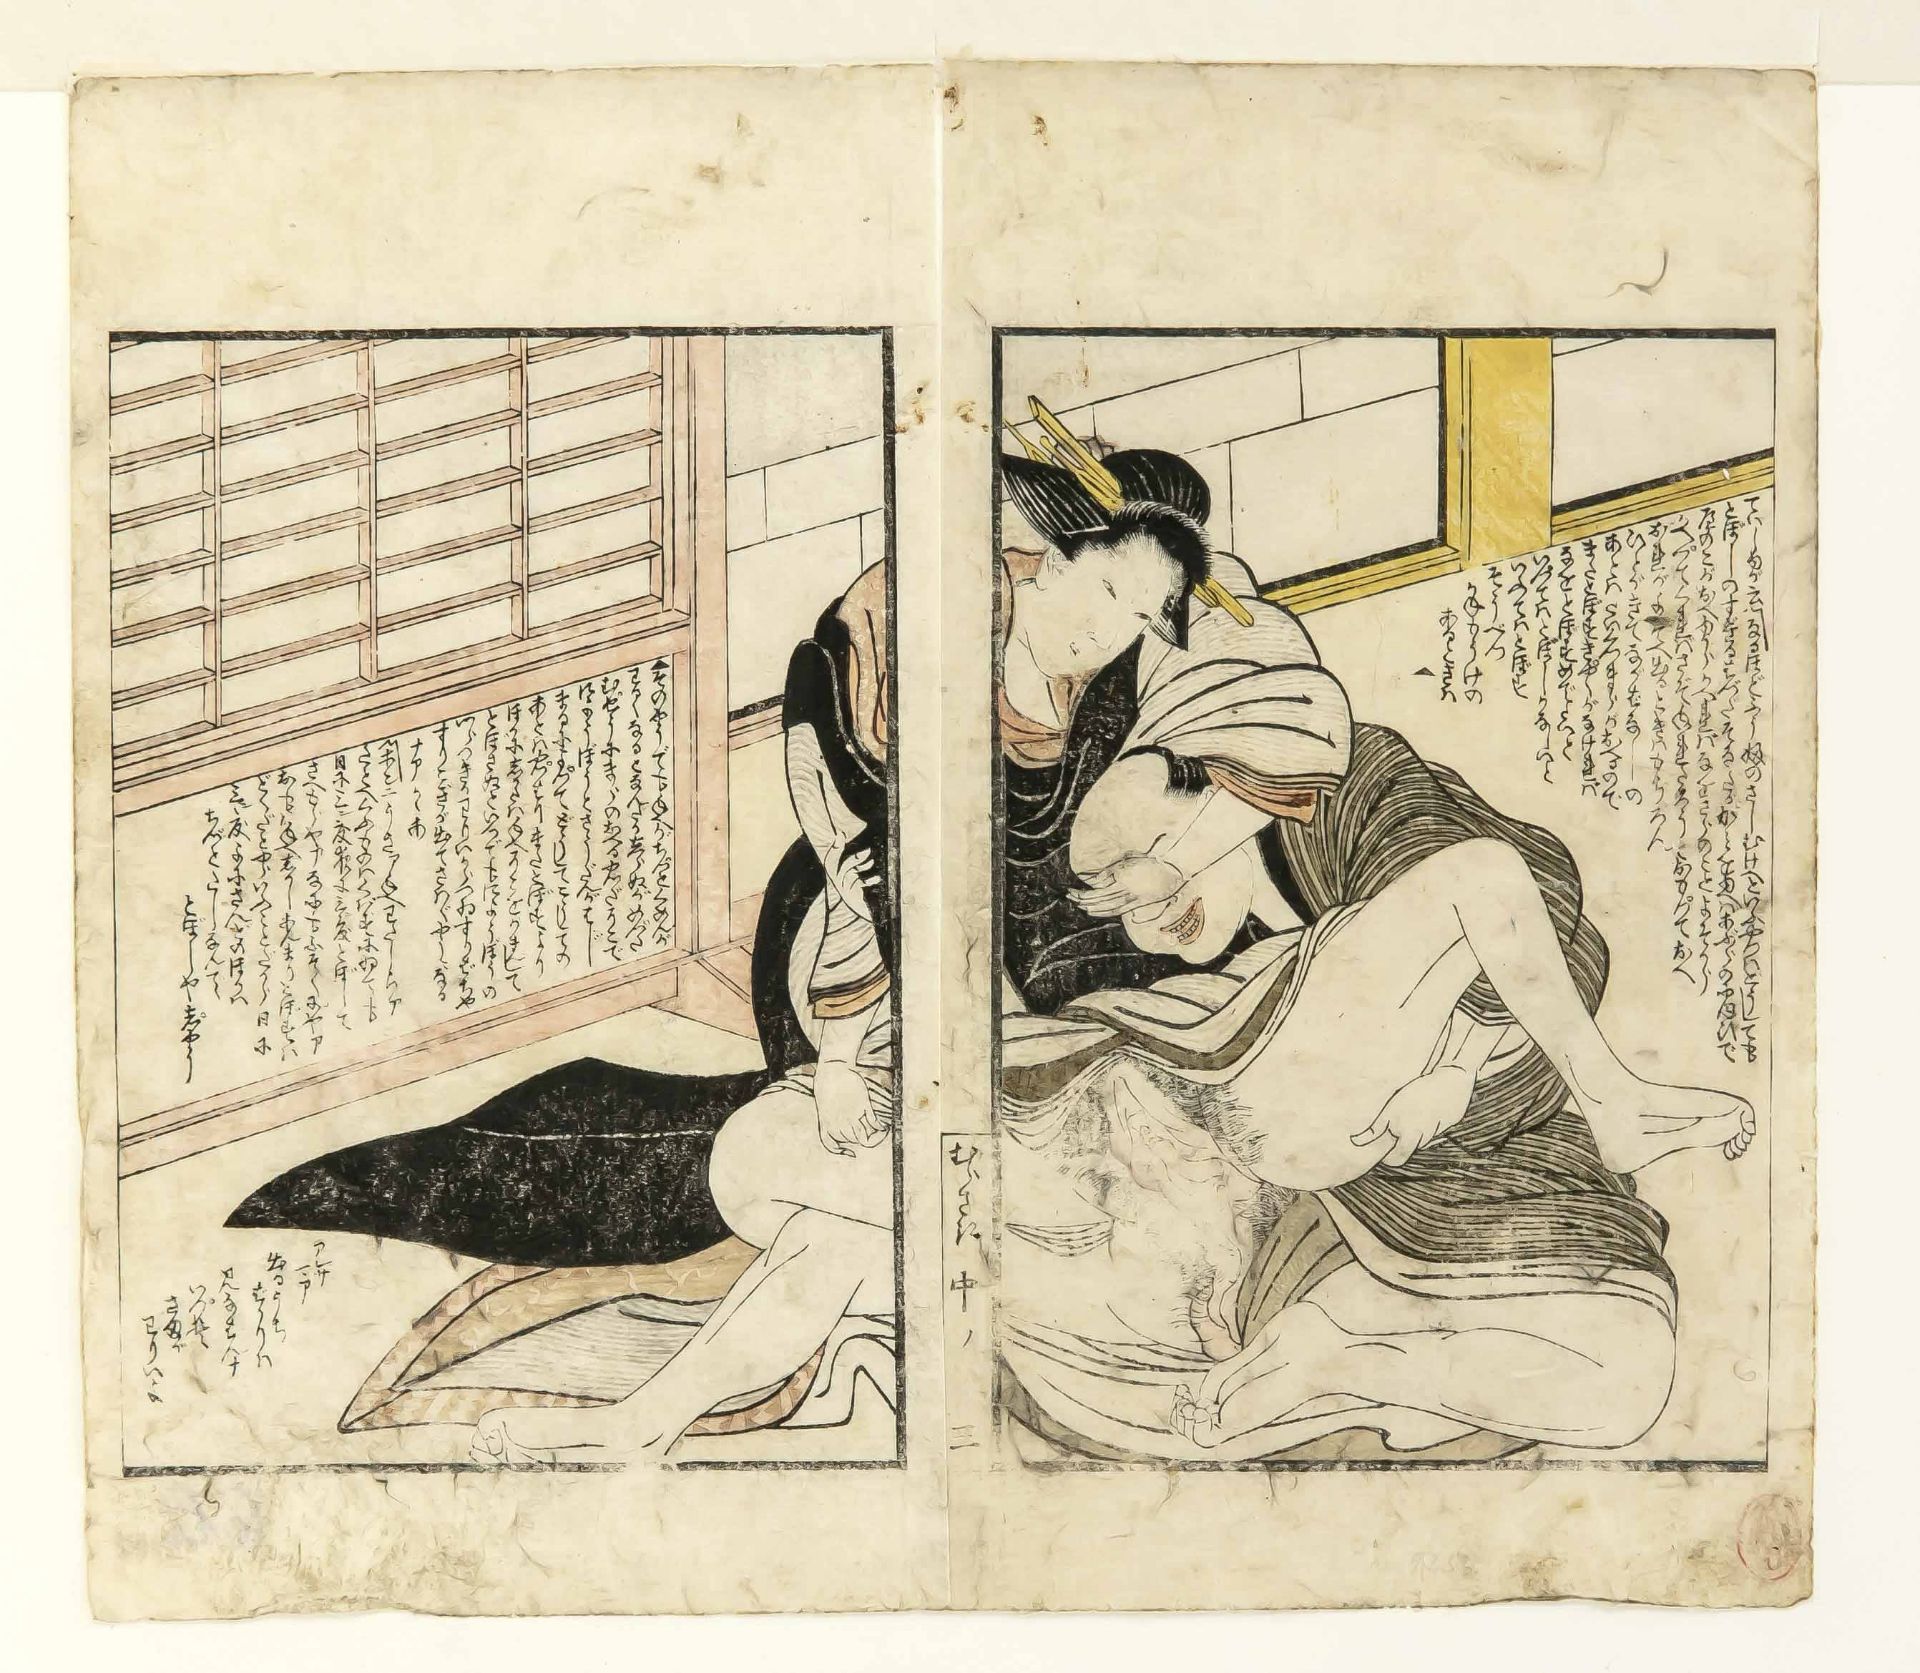 3 Shunga Doppelseiten, Japan, 19. Jh. (late Edo). F - Bild 3 aus 3